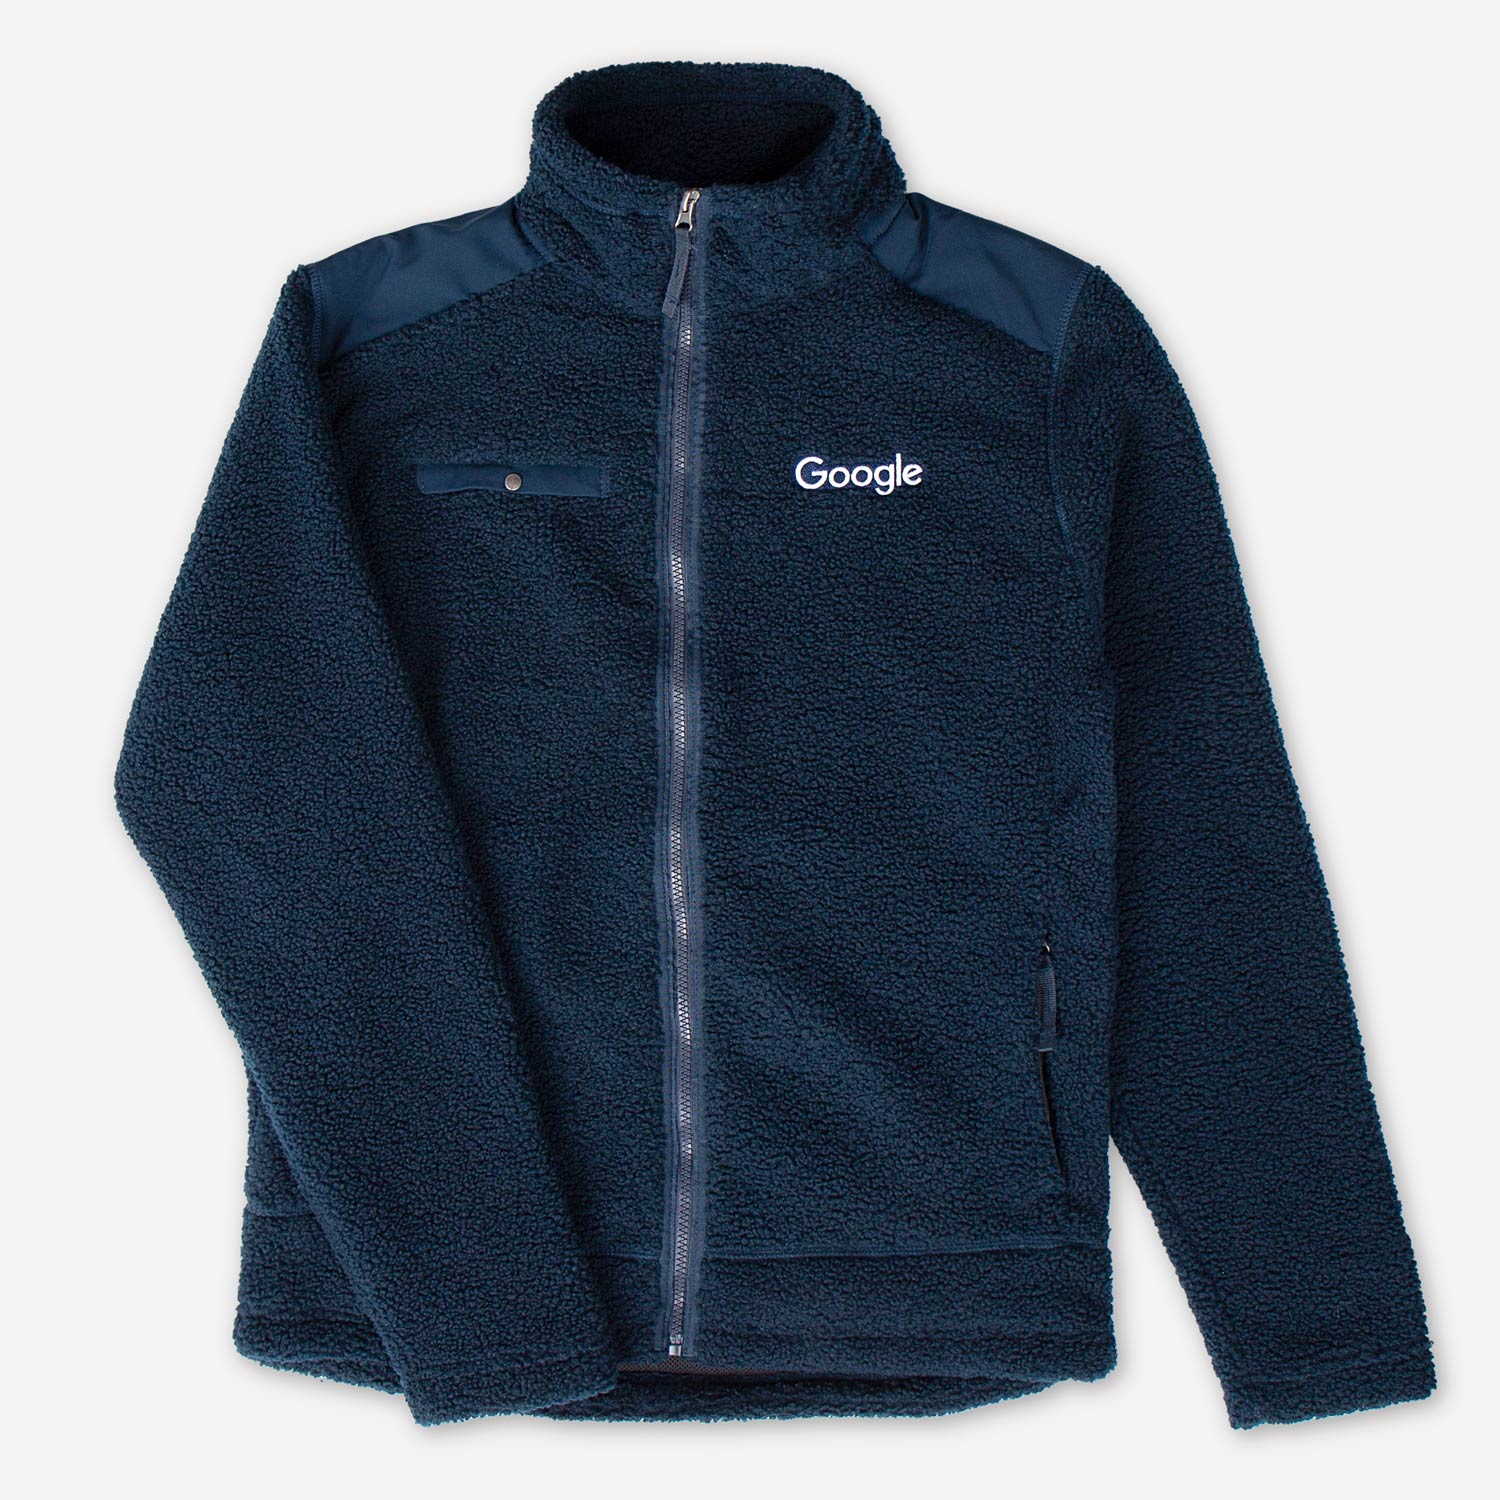 Google Horizon Navy Fleece Unisex Jacket